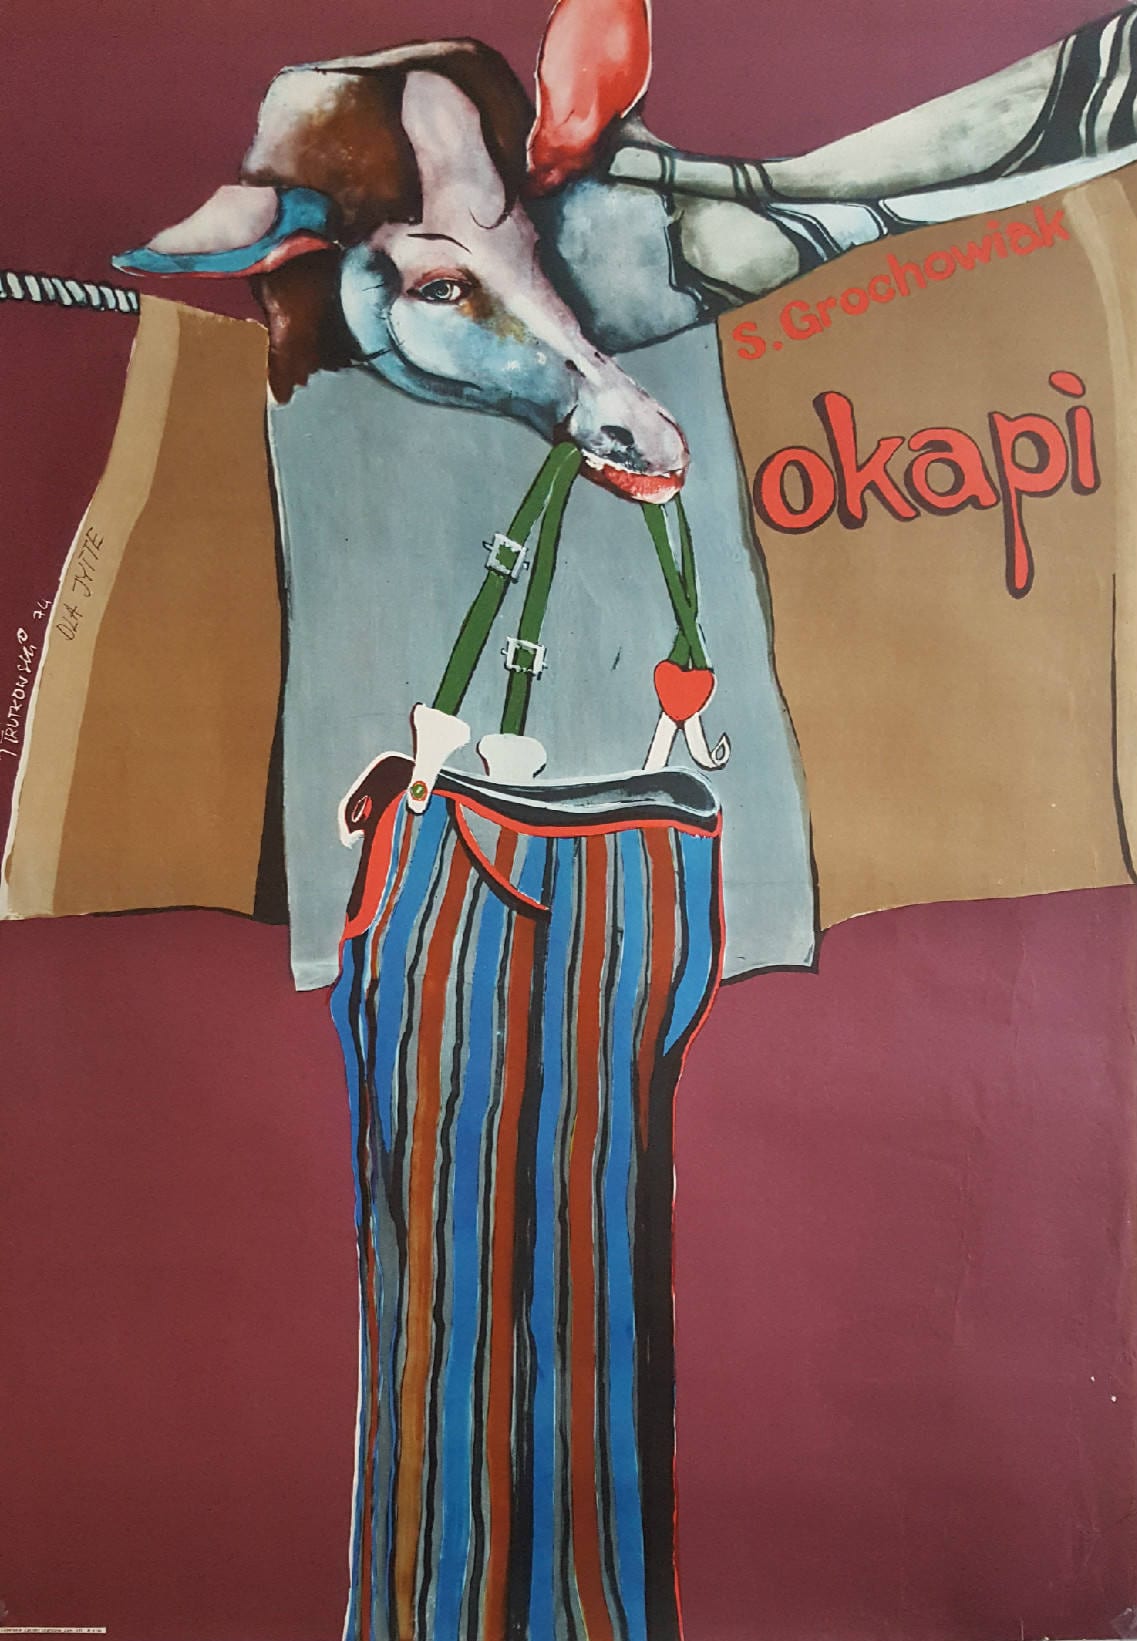 1974 Okapi Polish Theatre Poster - Original Vintage Poster